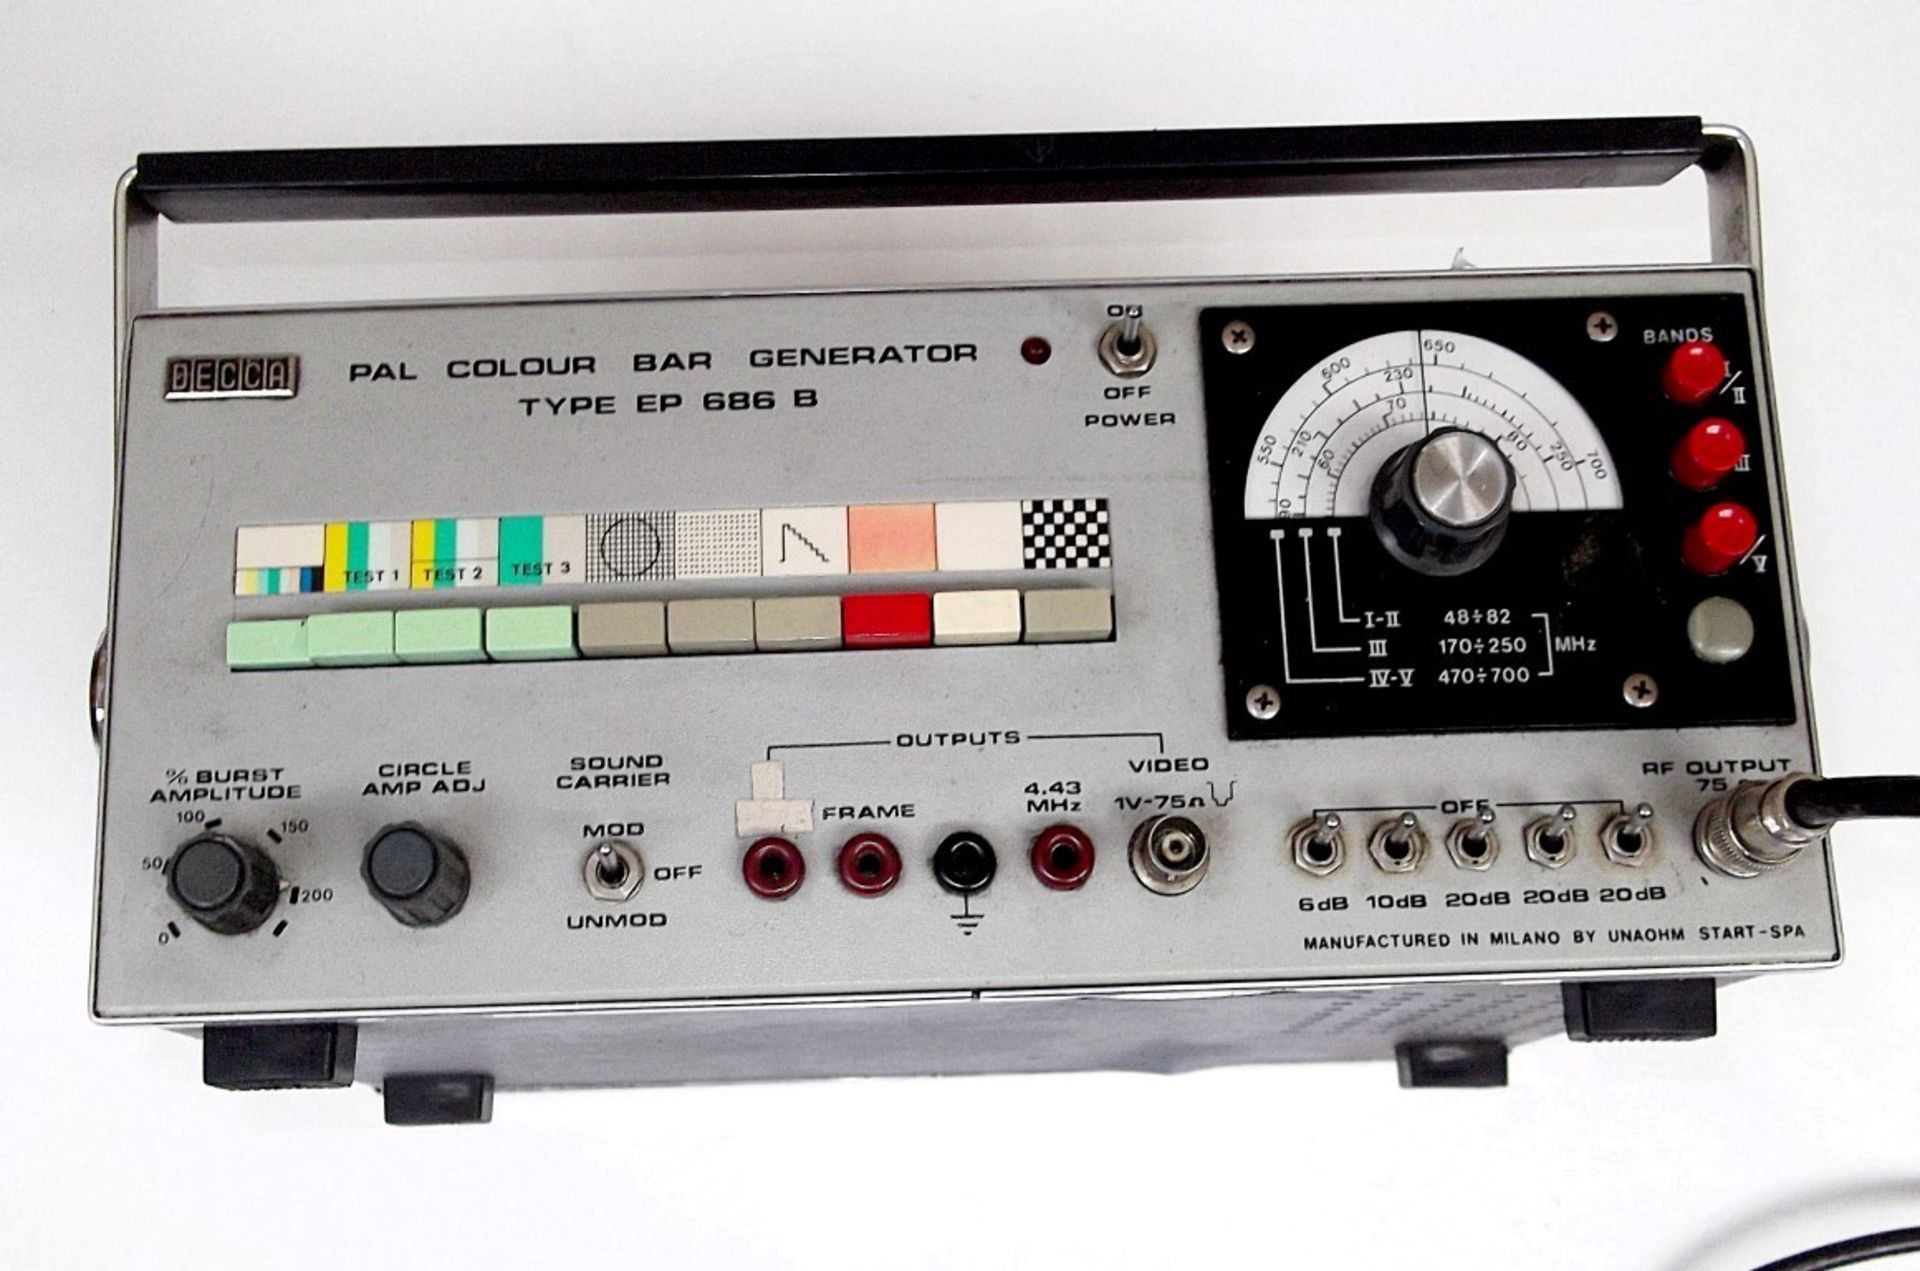 1 x Decca Colour Bar Generator (Pal) - Model Type: EP 686 B (EP686B) - REF: MIT66 - Used, Item